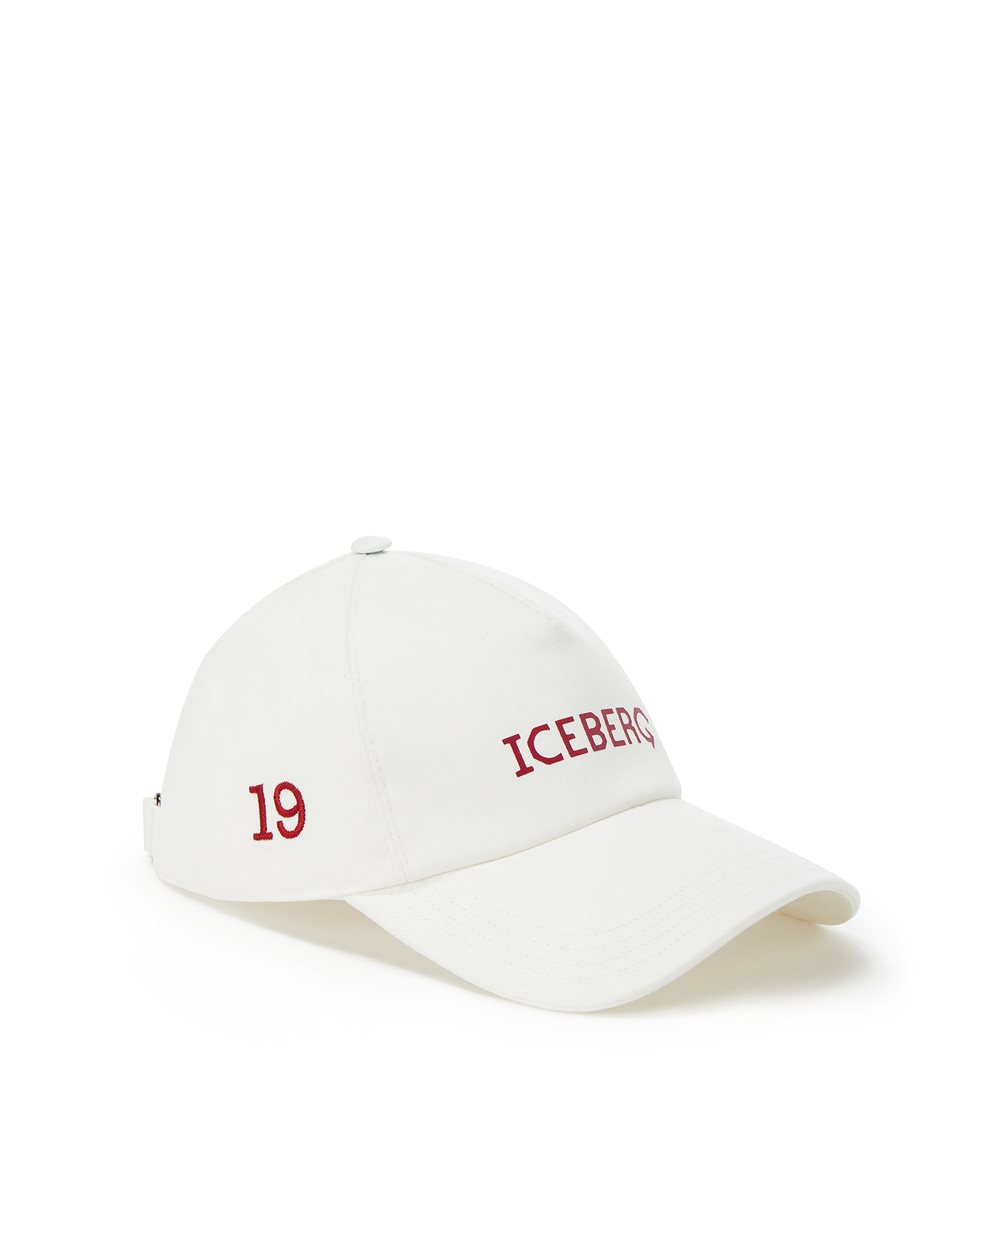 Baseball cap with contrasting logo - carosello HP man accessories | Iceberg - Official Website